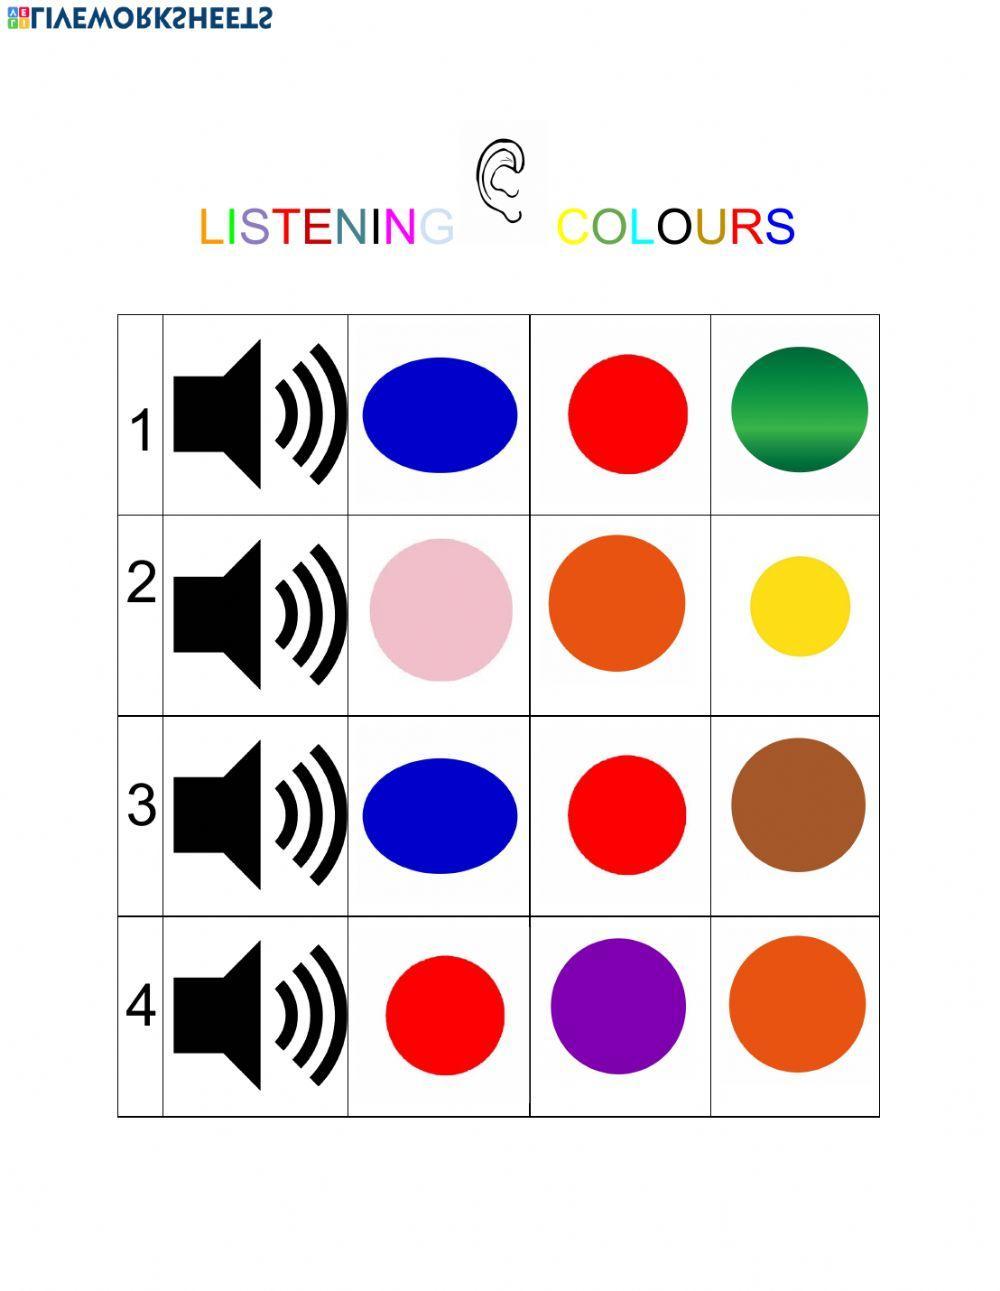 Listening colours